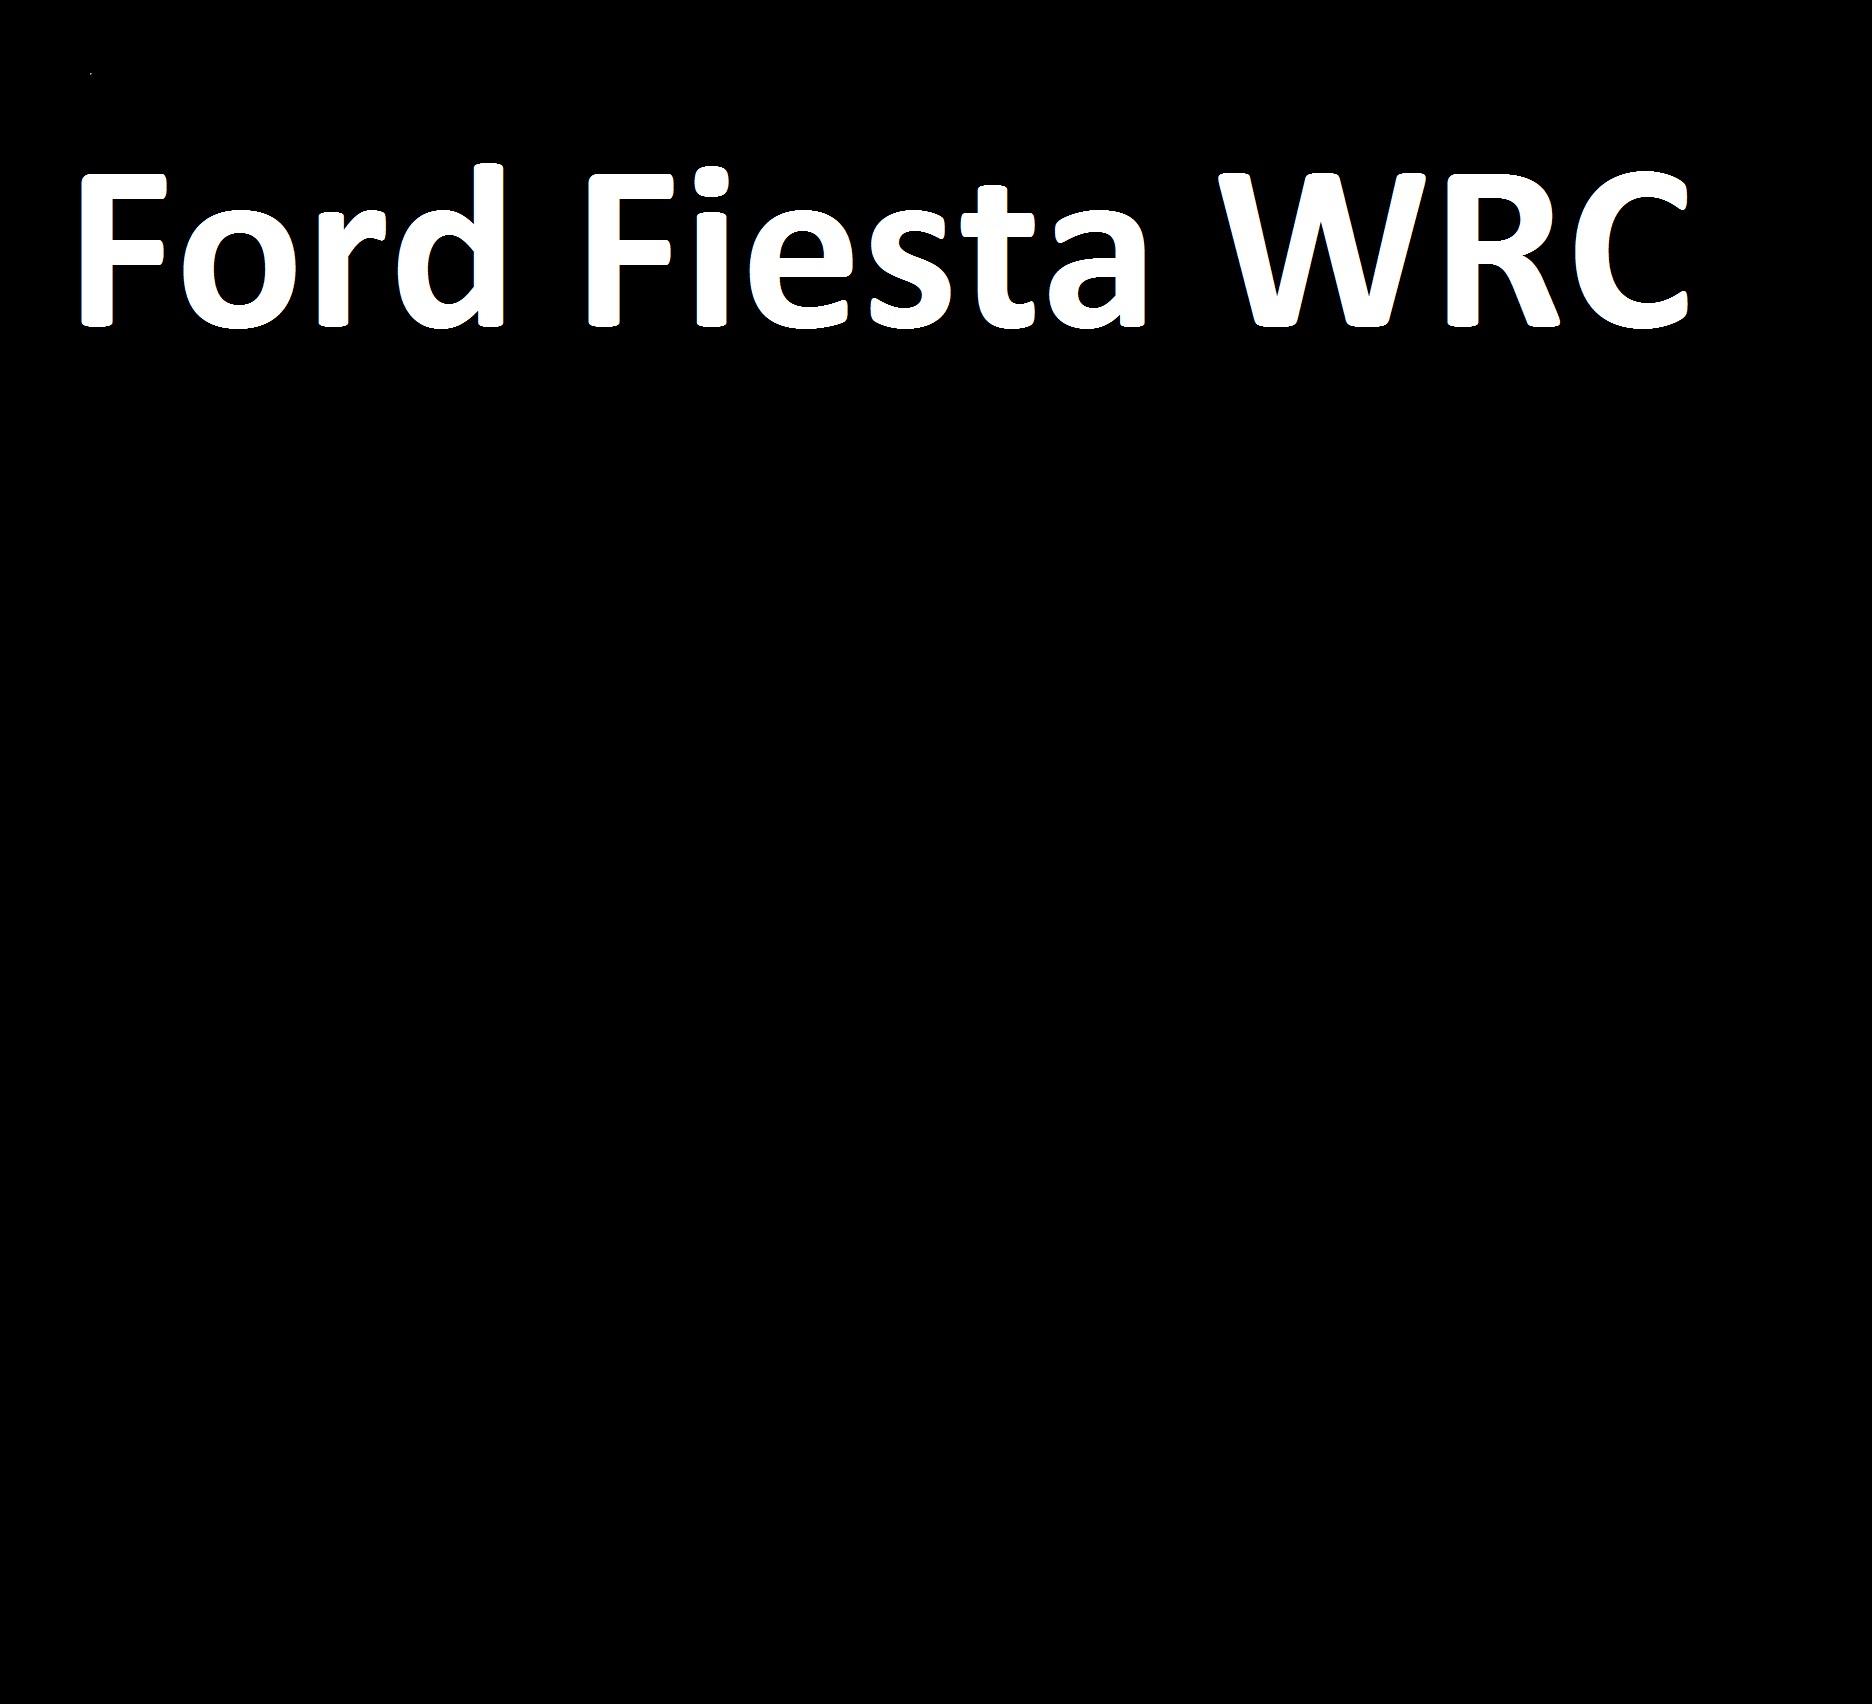 afbeelding van afbeelding van fiesta WRC bodykit, MK7 WRC kit, WRC bodykit,WRC vleugels, WRC achterbumper, WRC bumper, WRC voorbumper, fiesta WRC bumper, fiesta WRC rallykit, fiesta widebody, ford WRC bumper, ford WRC rallykit, ford widebody, ford wide body kit